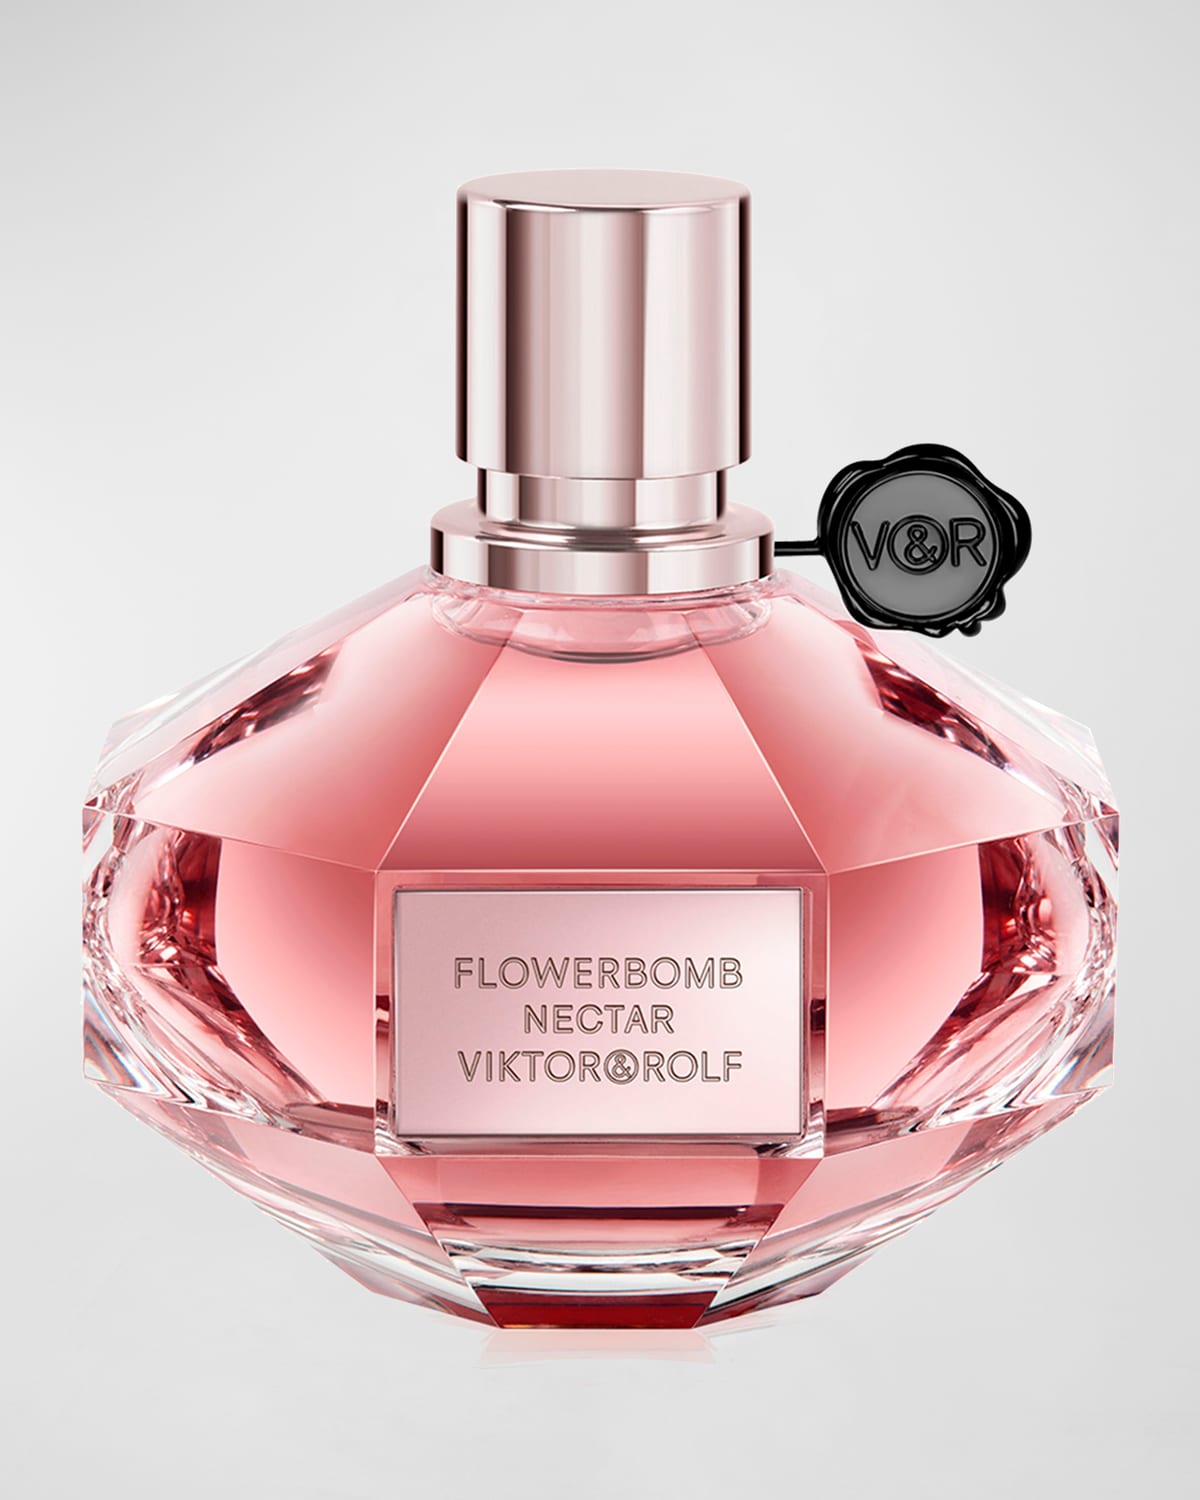 Flowerbomb Nectar Eau de Parfum, 3 oz./ 89 mL